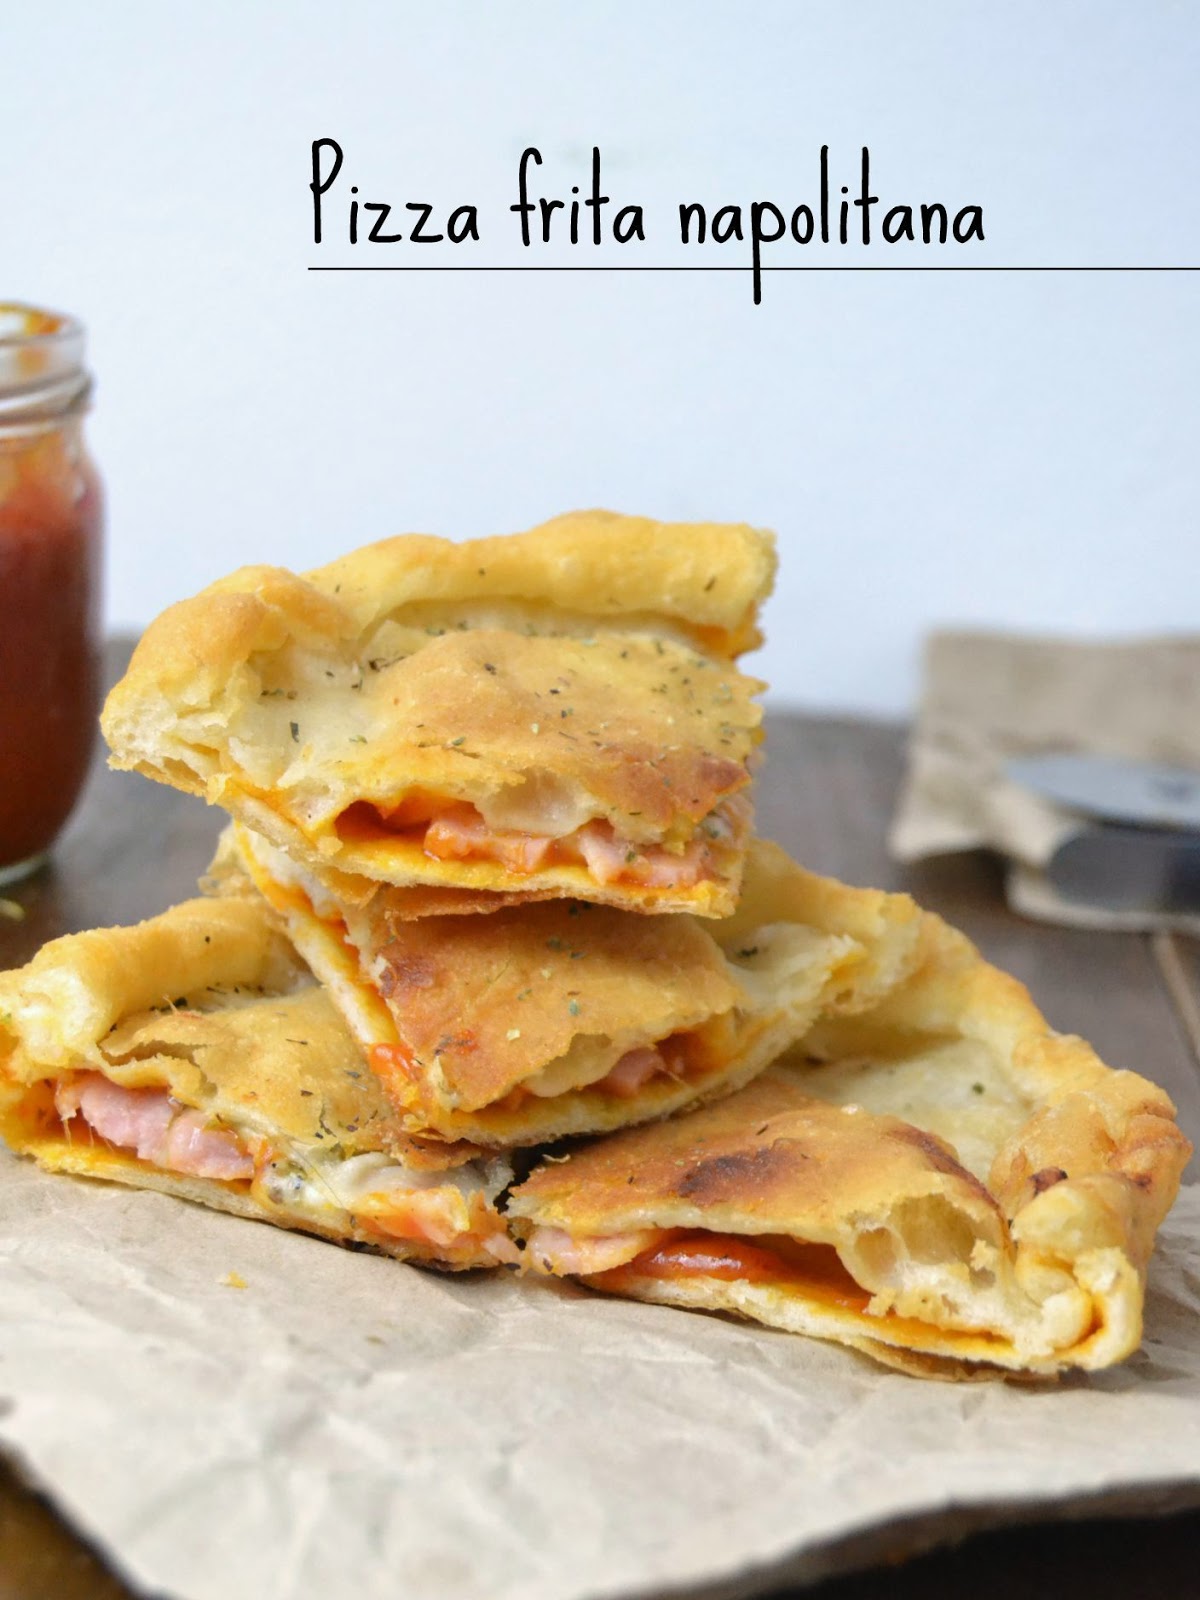 Pizza frita napolitana - Juanan Sempere